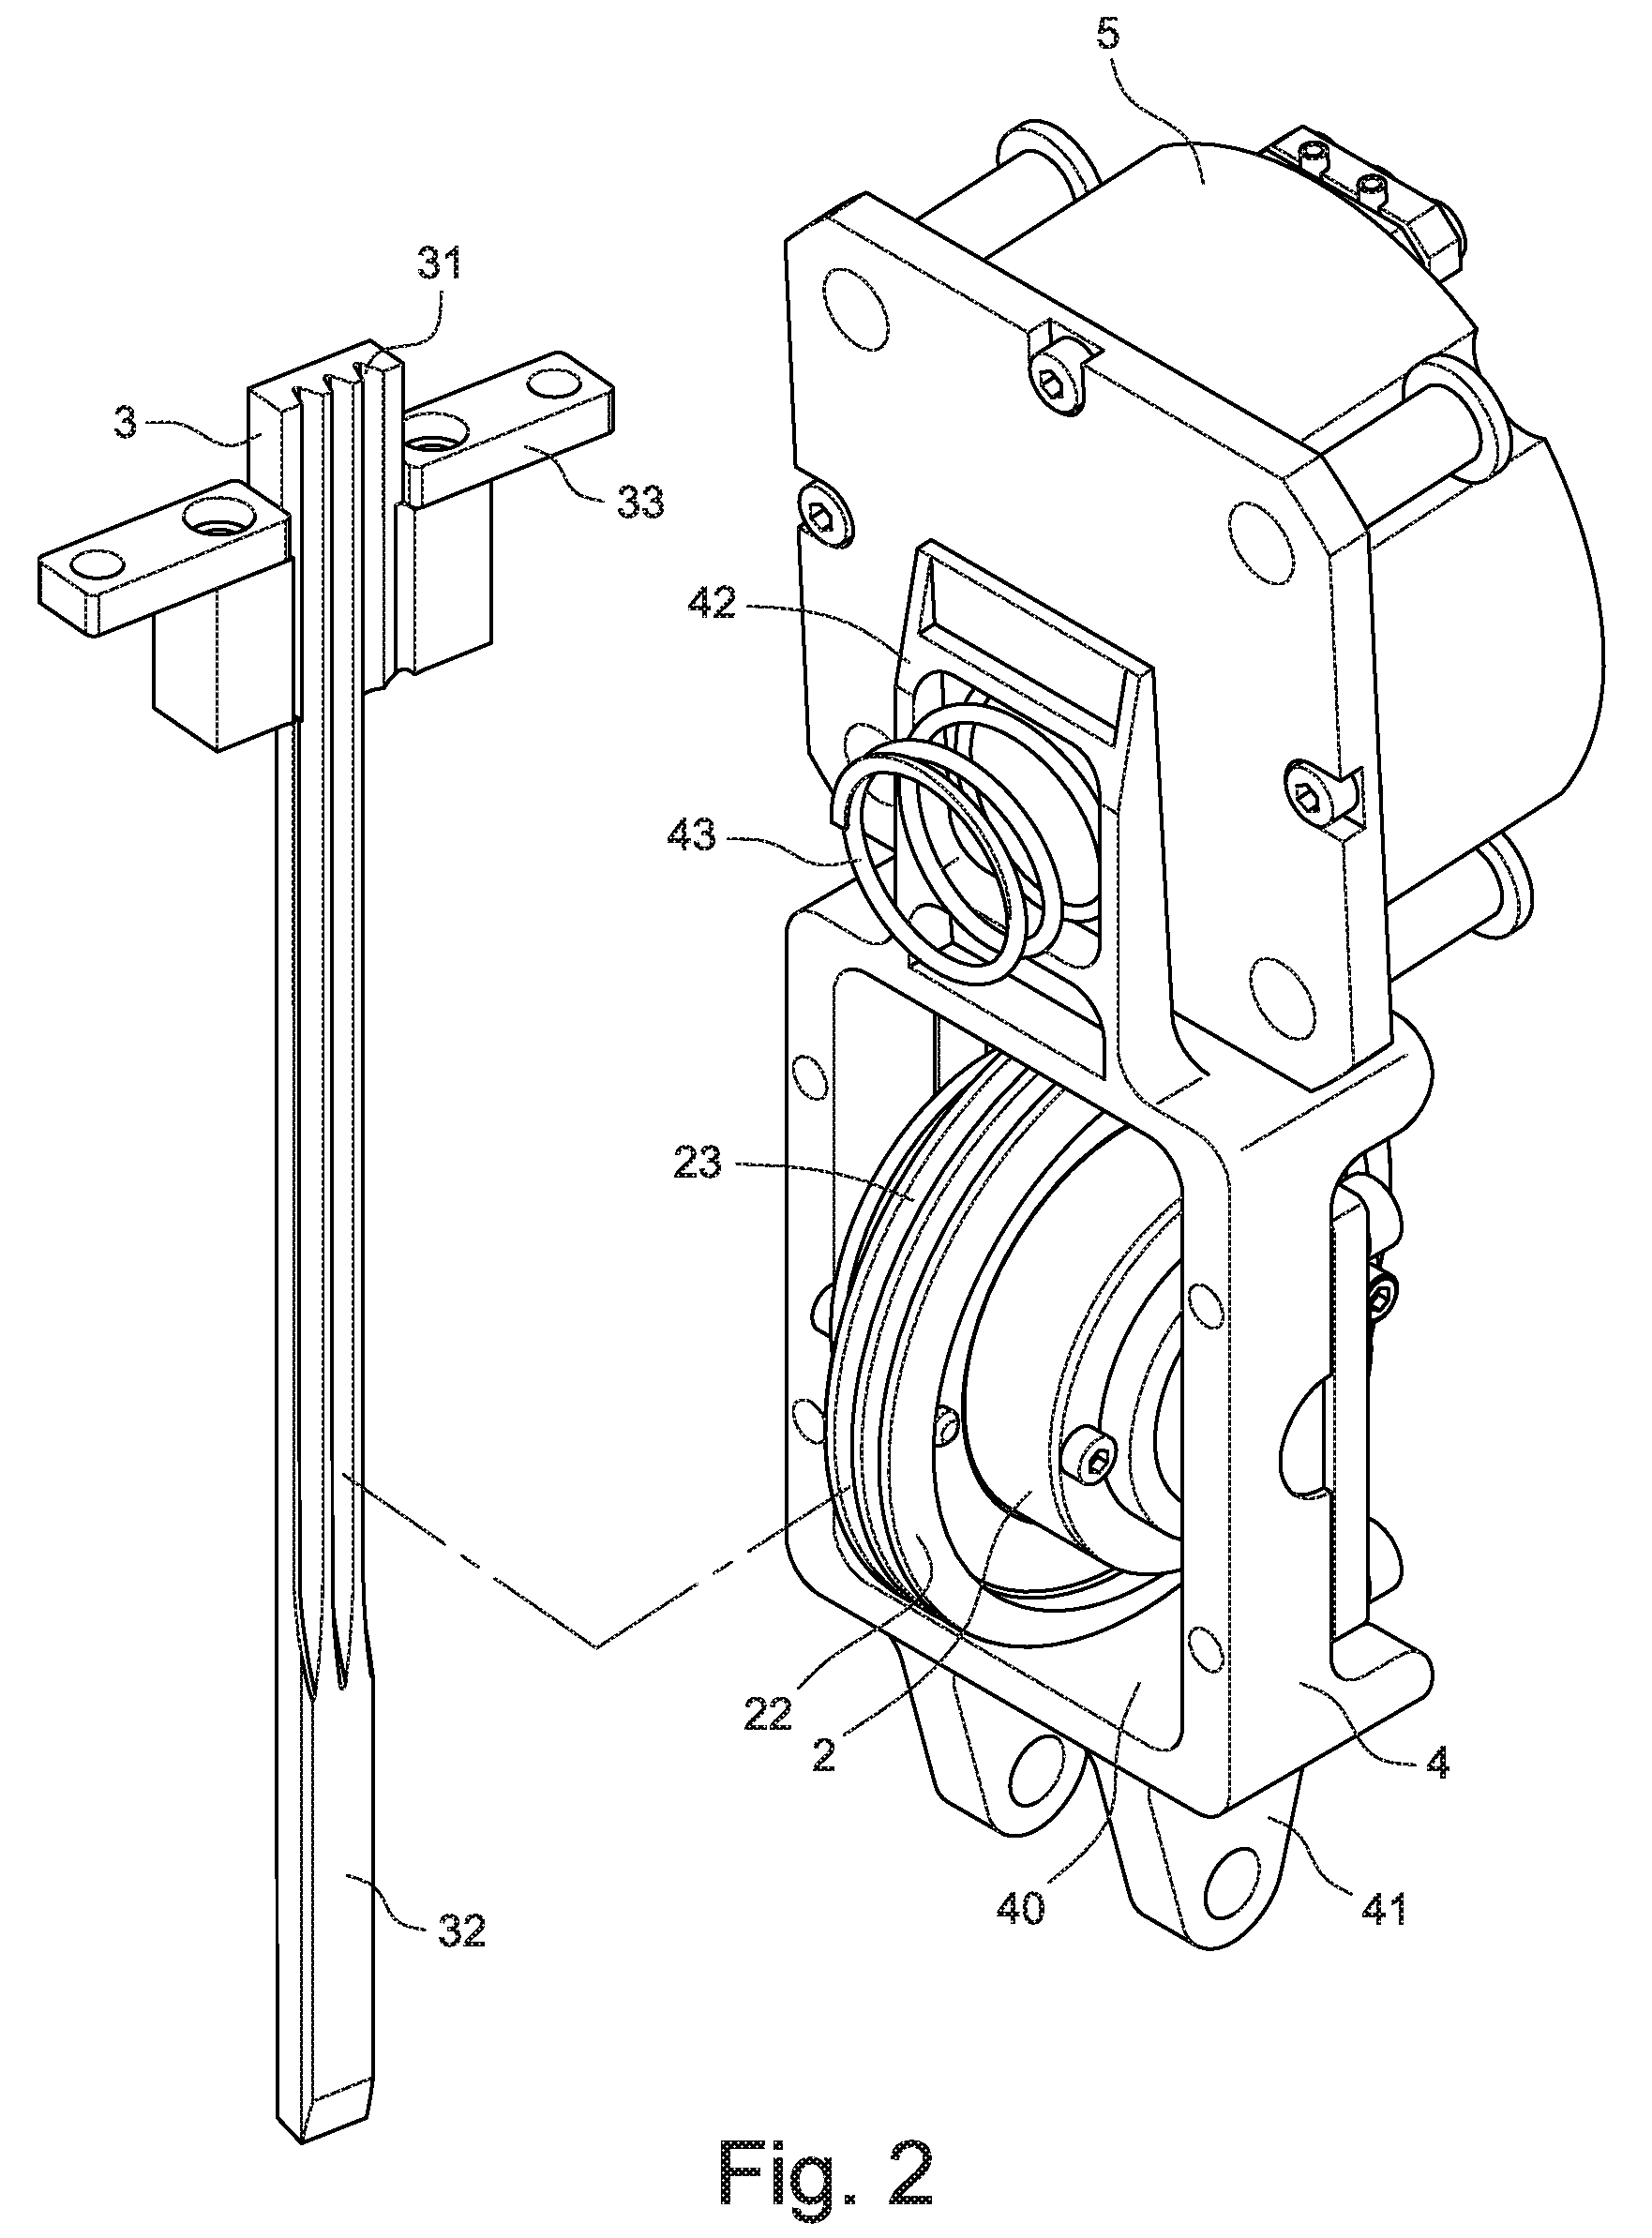 Actuator for Electrical Nail Gun